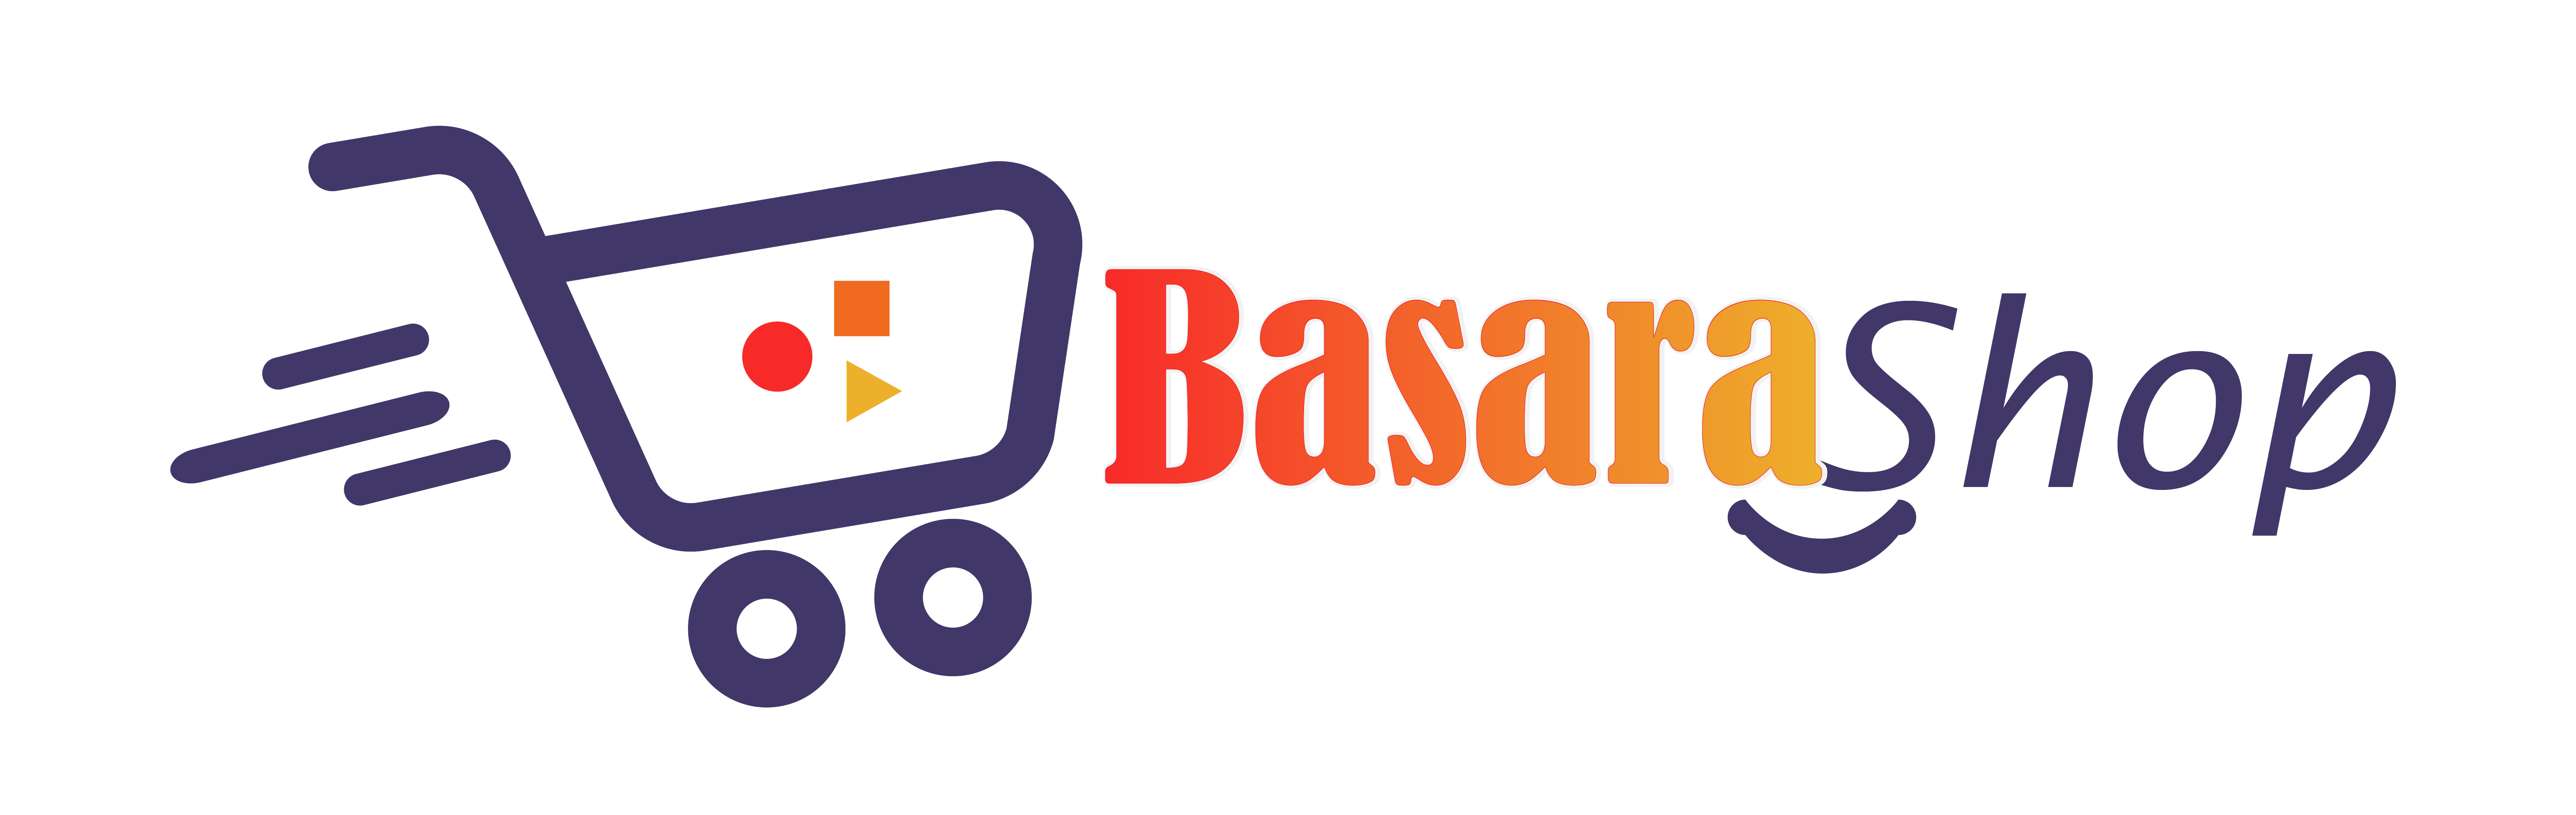 Basara Shop